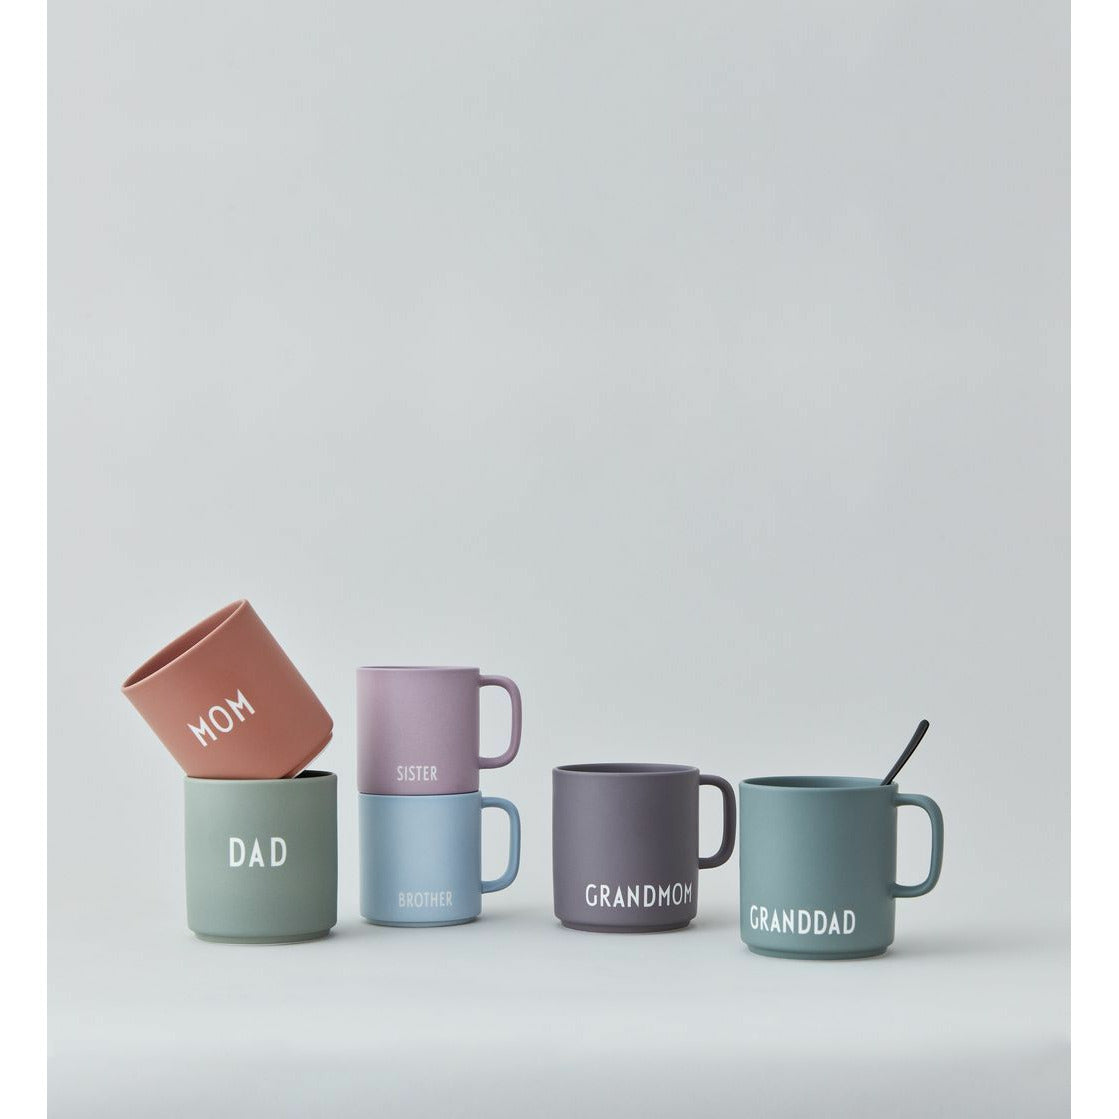 Design Lettere Mug